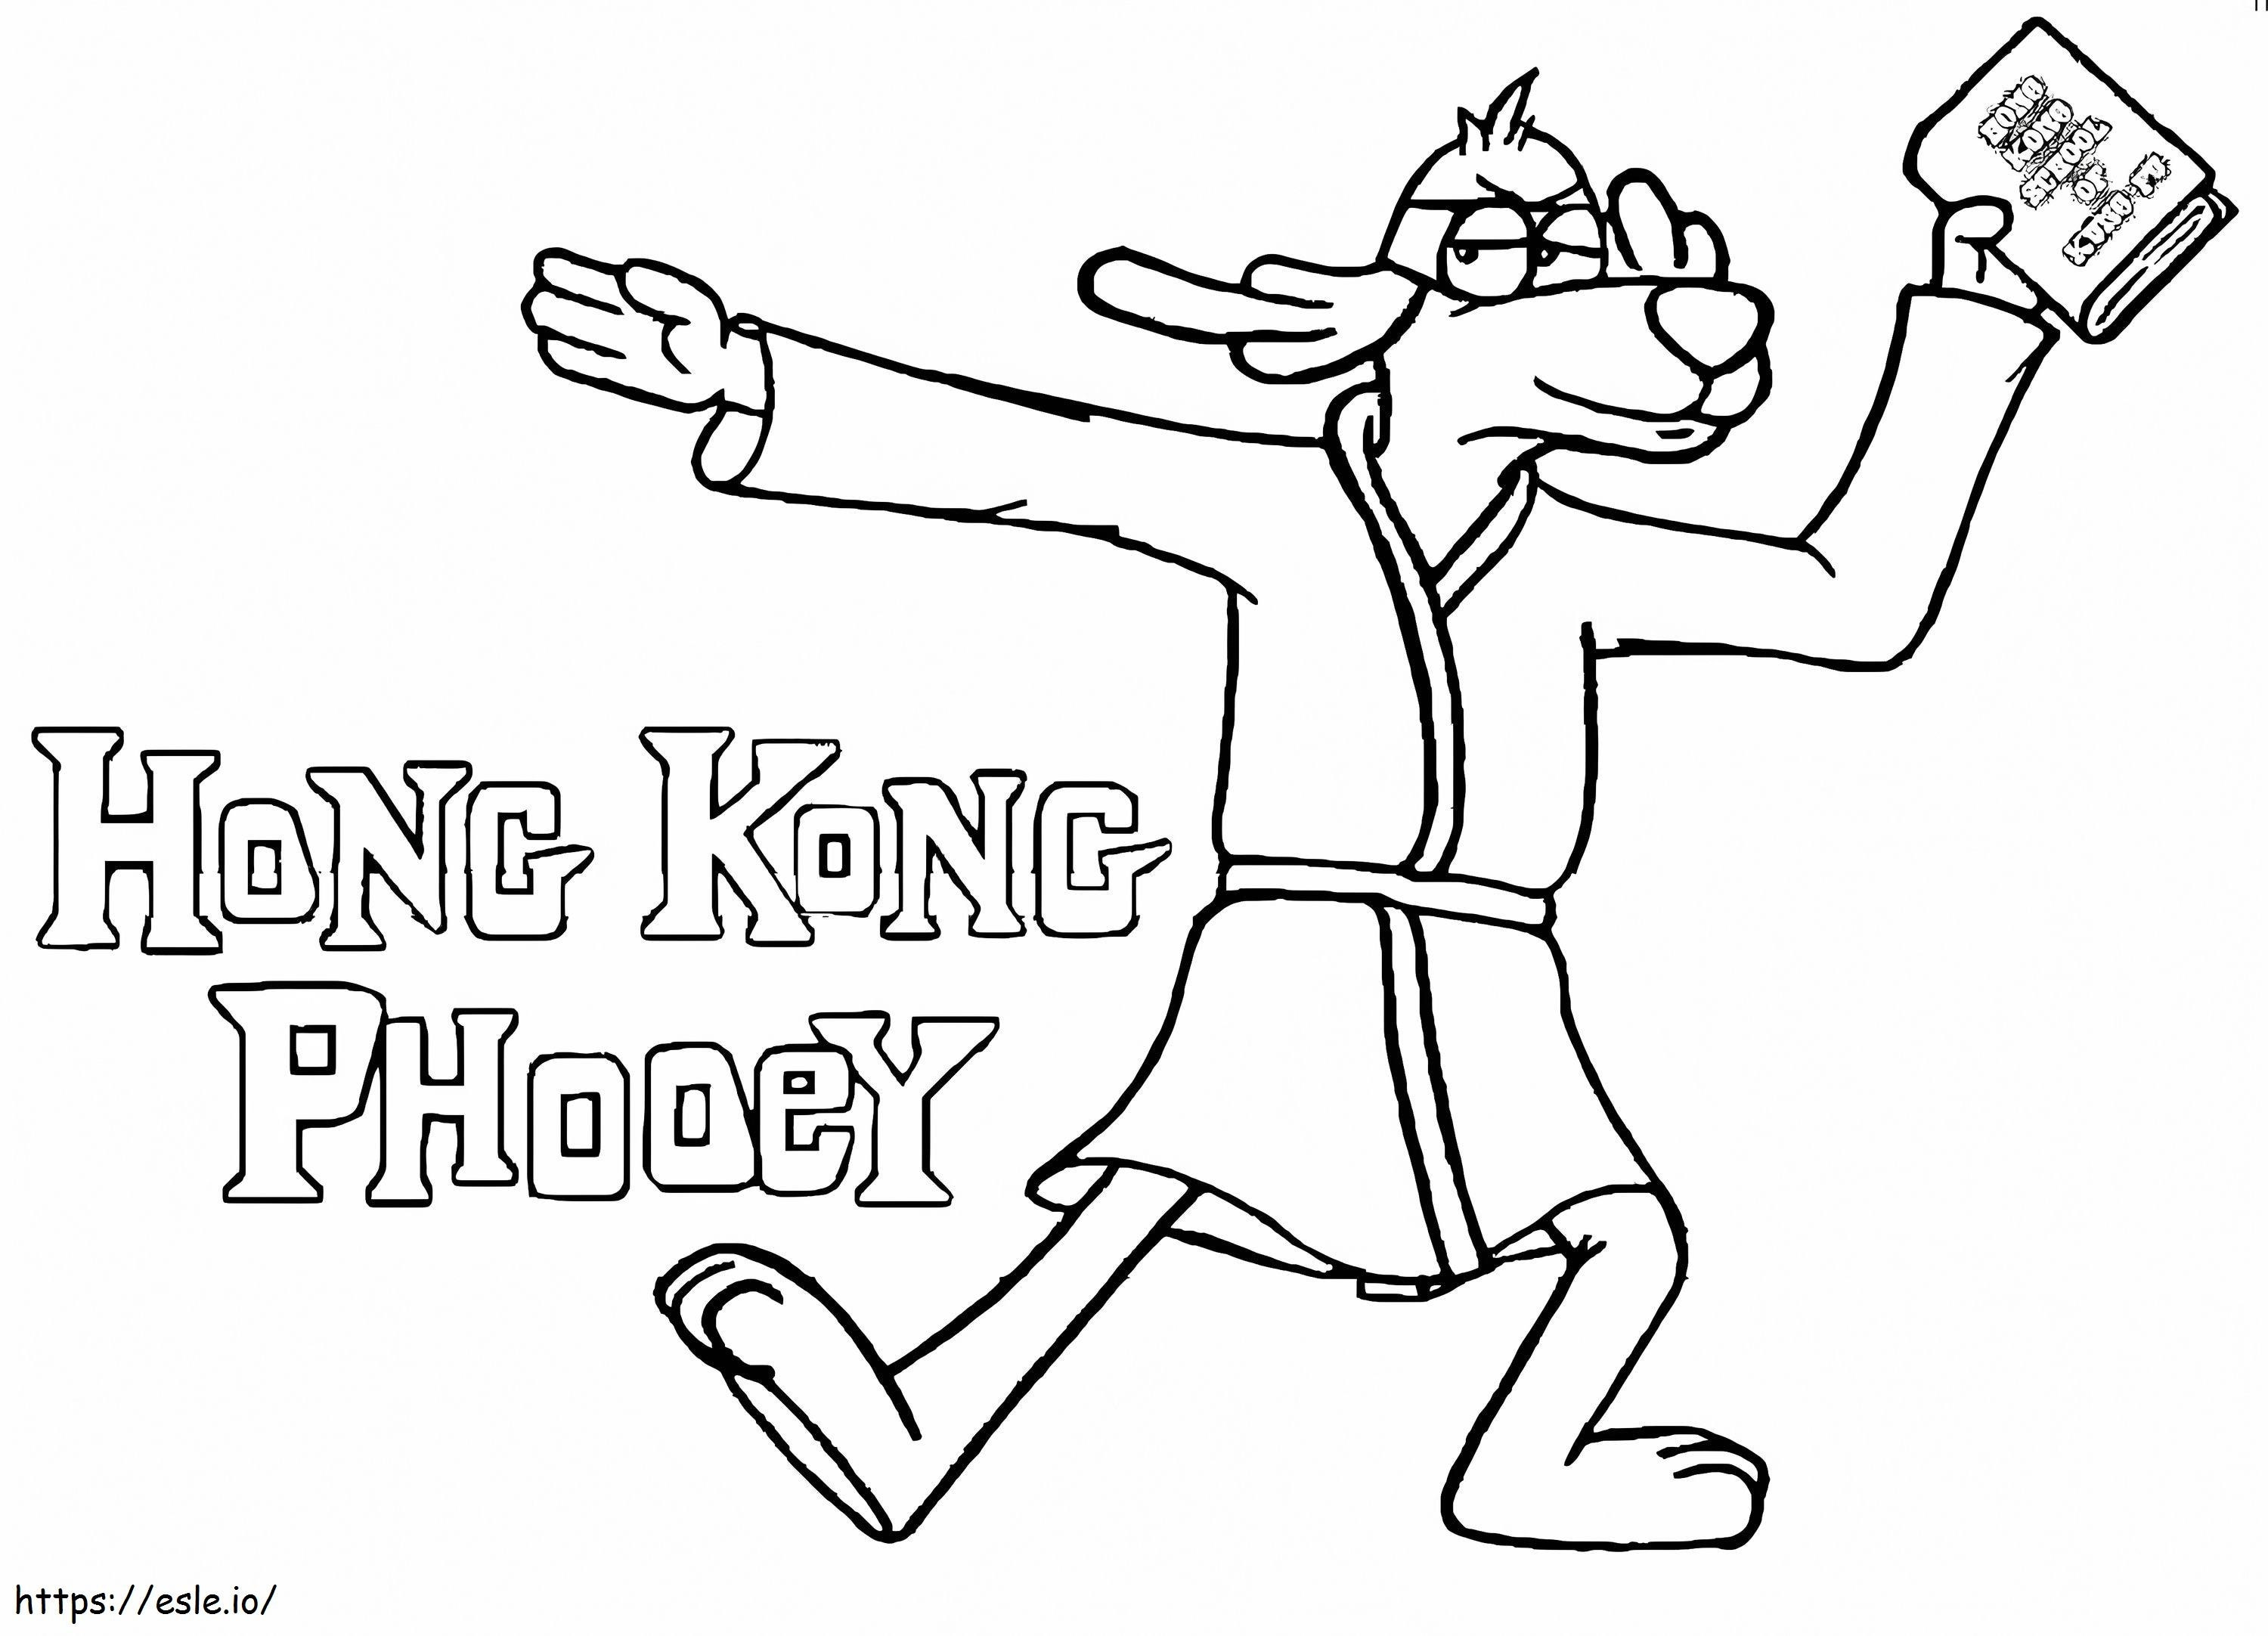 Hong Kong Phooey met een boek kleurplaat kleurplaat